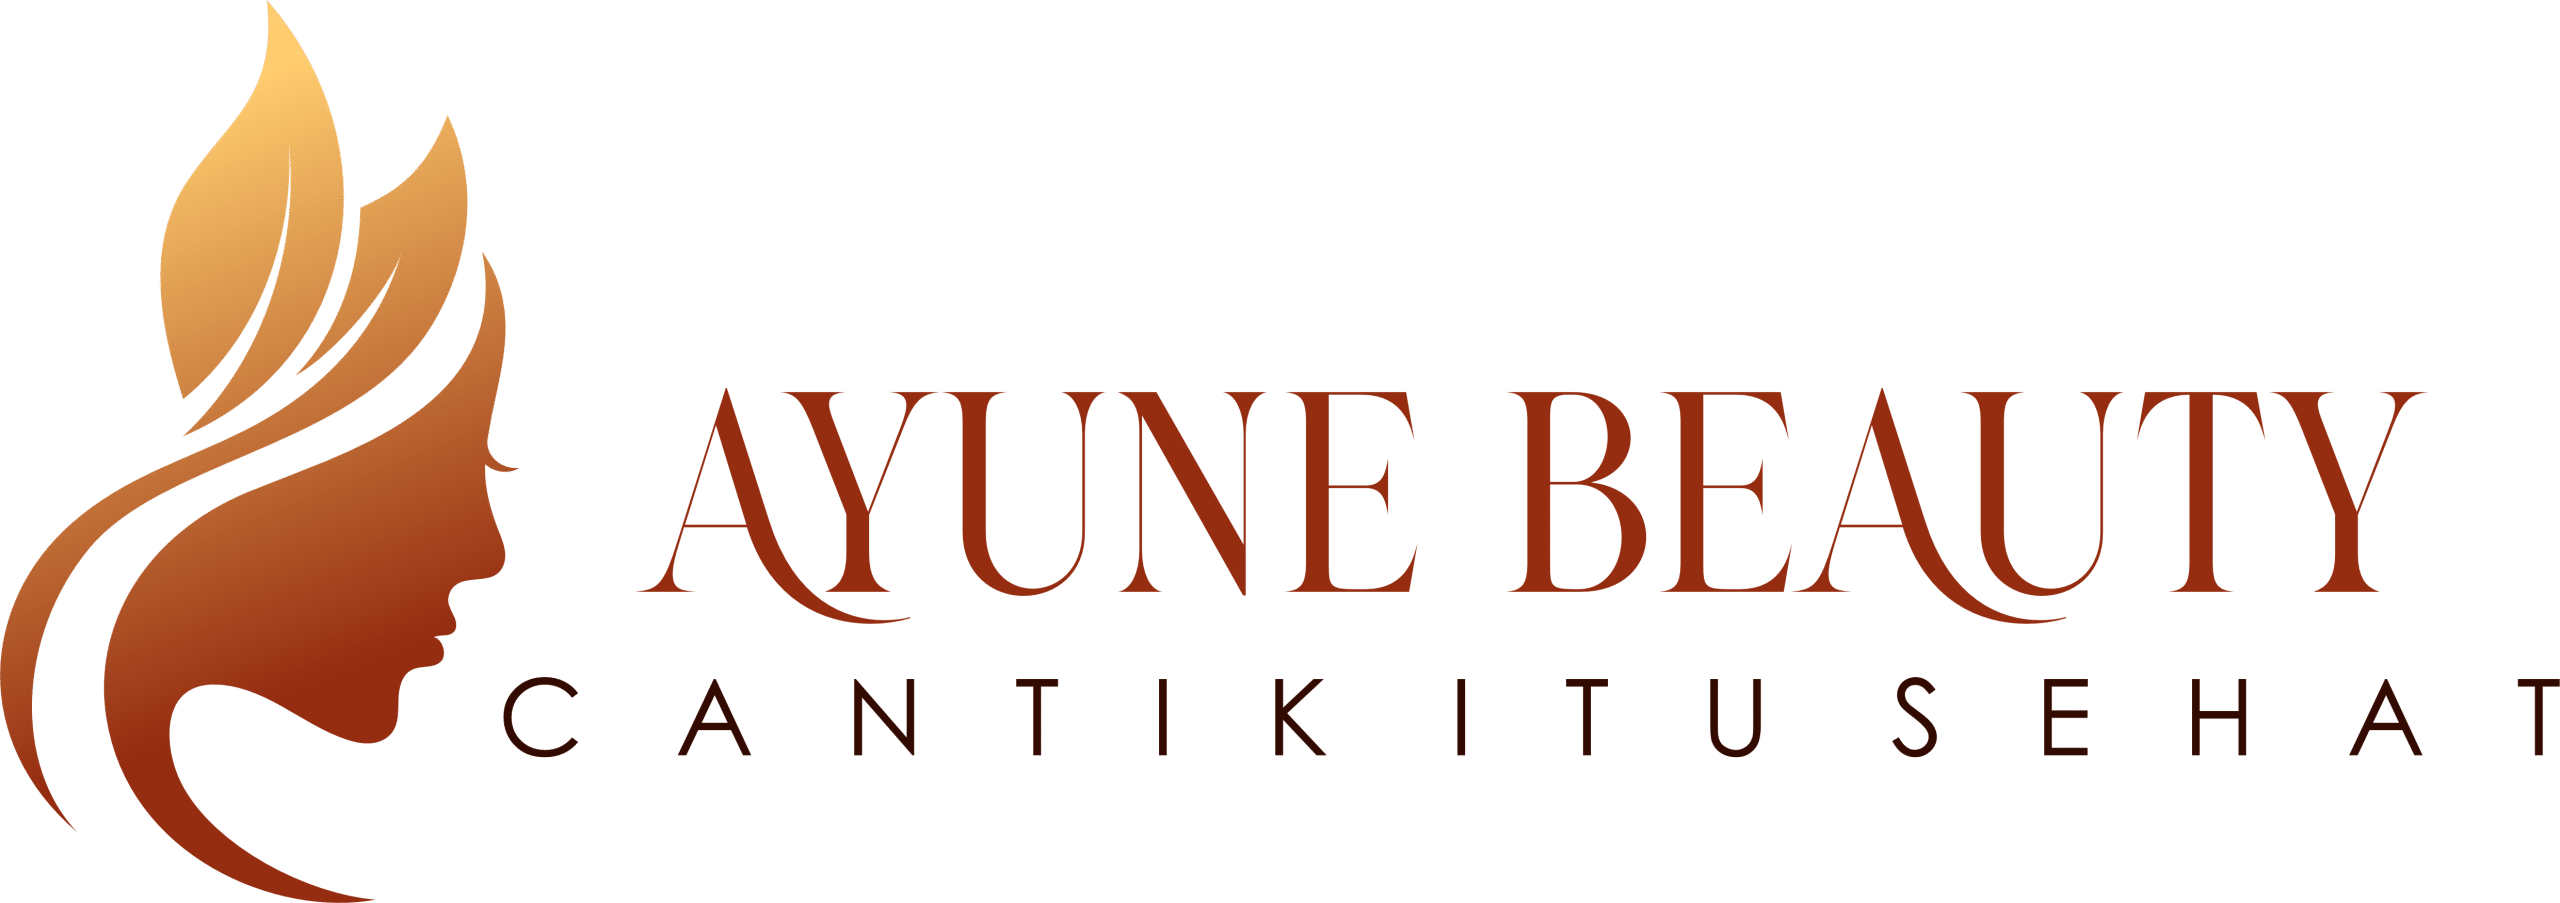 Ayune Beauty New Logo